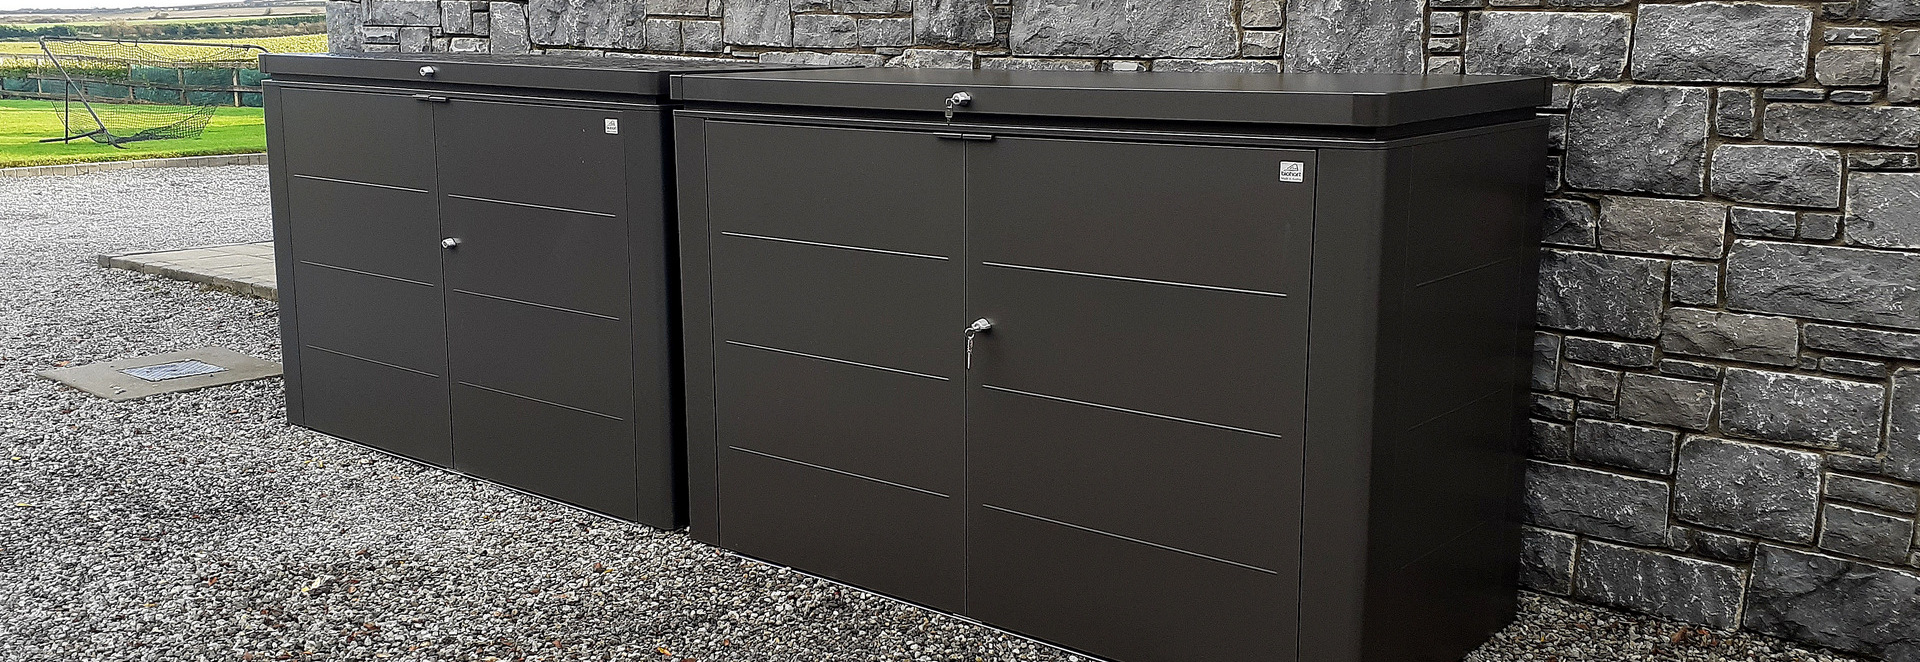 Premium quality, secure & rainproof Wheelie Bin & Bike Storage units - Biohort HighBoard 200  | Supplied + Installed in Skerries, Co Dublin.